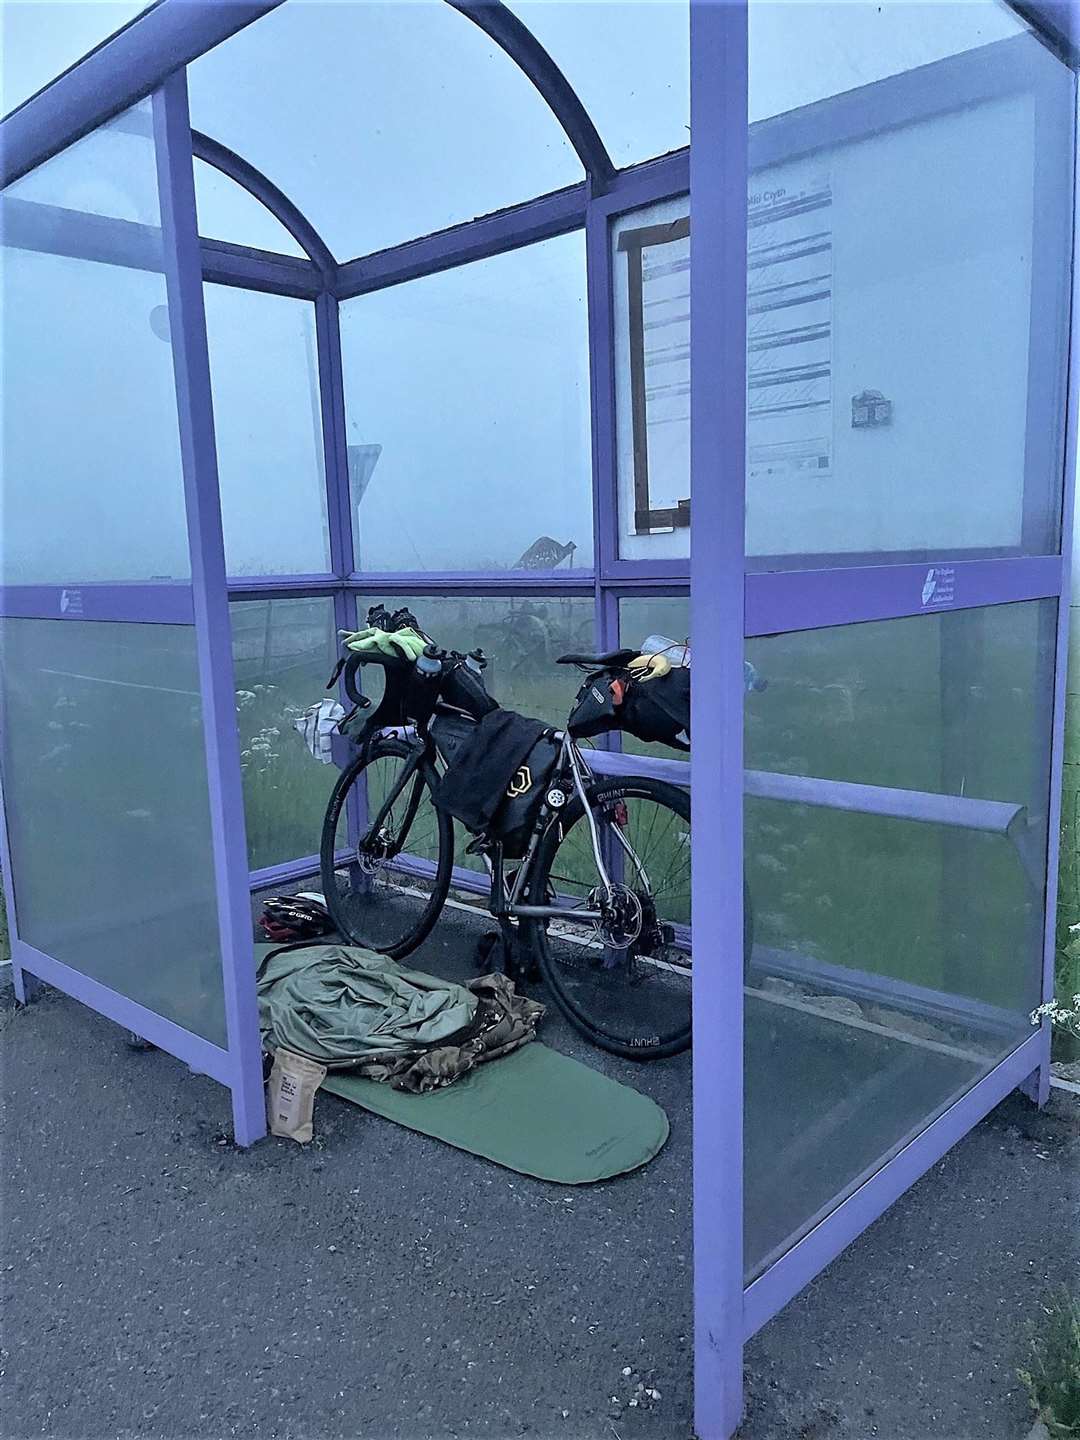 Tim slept in this Caithness bus shelter to raise awareness of rural homelessness.